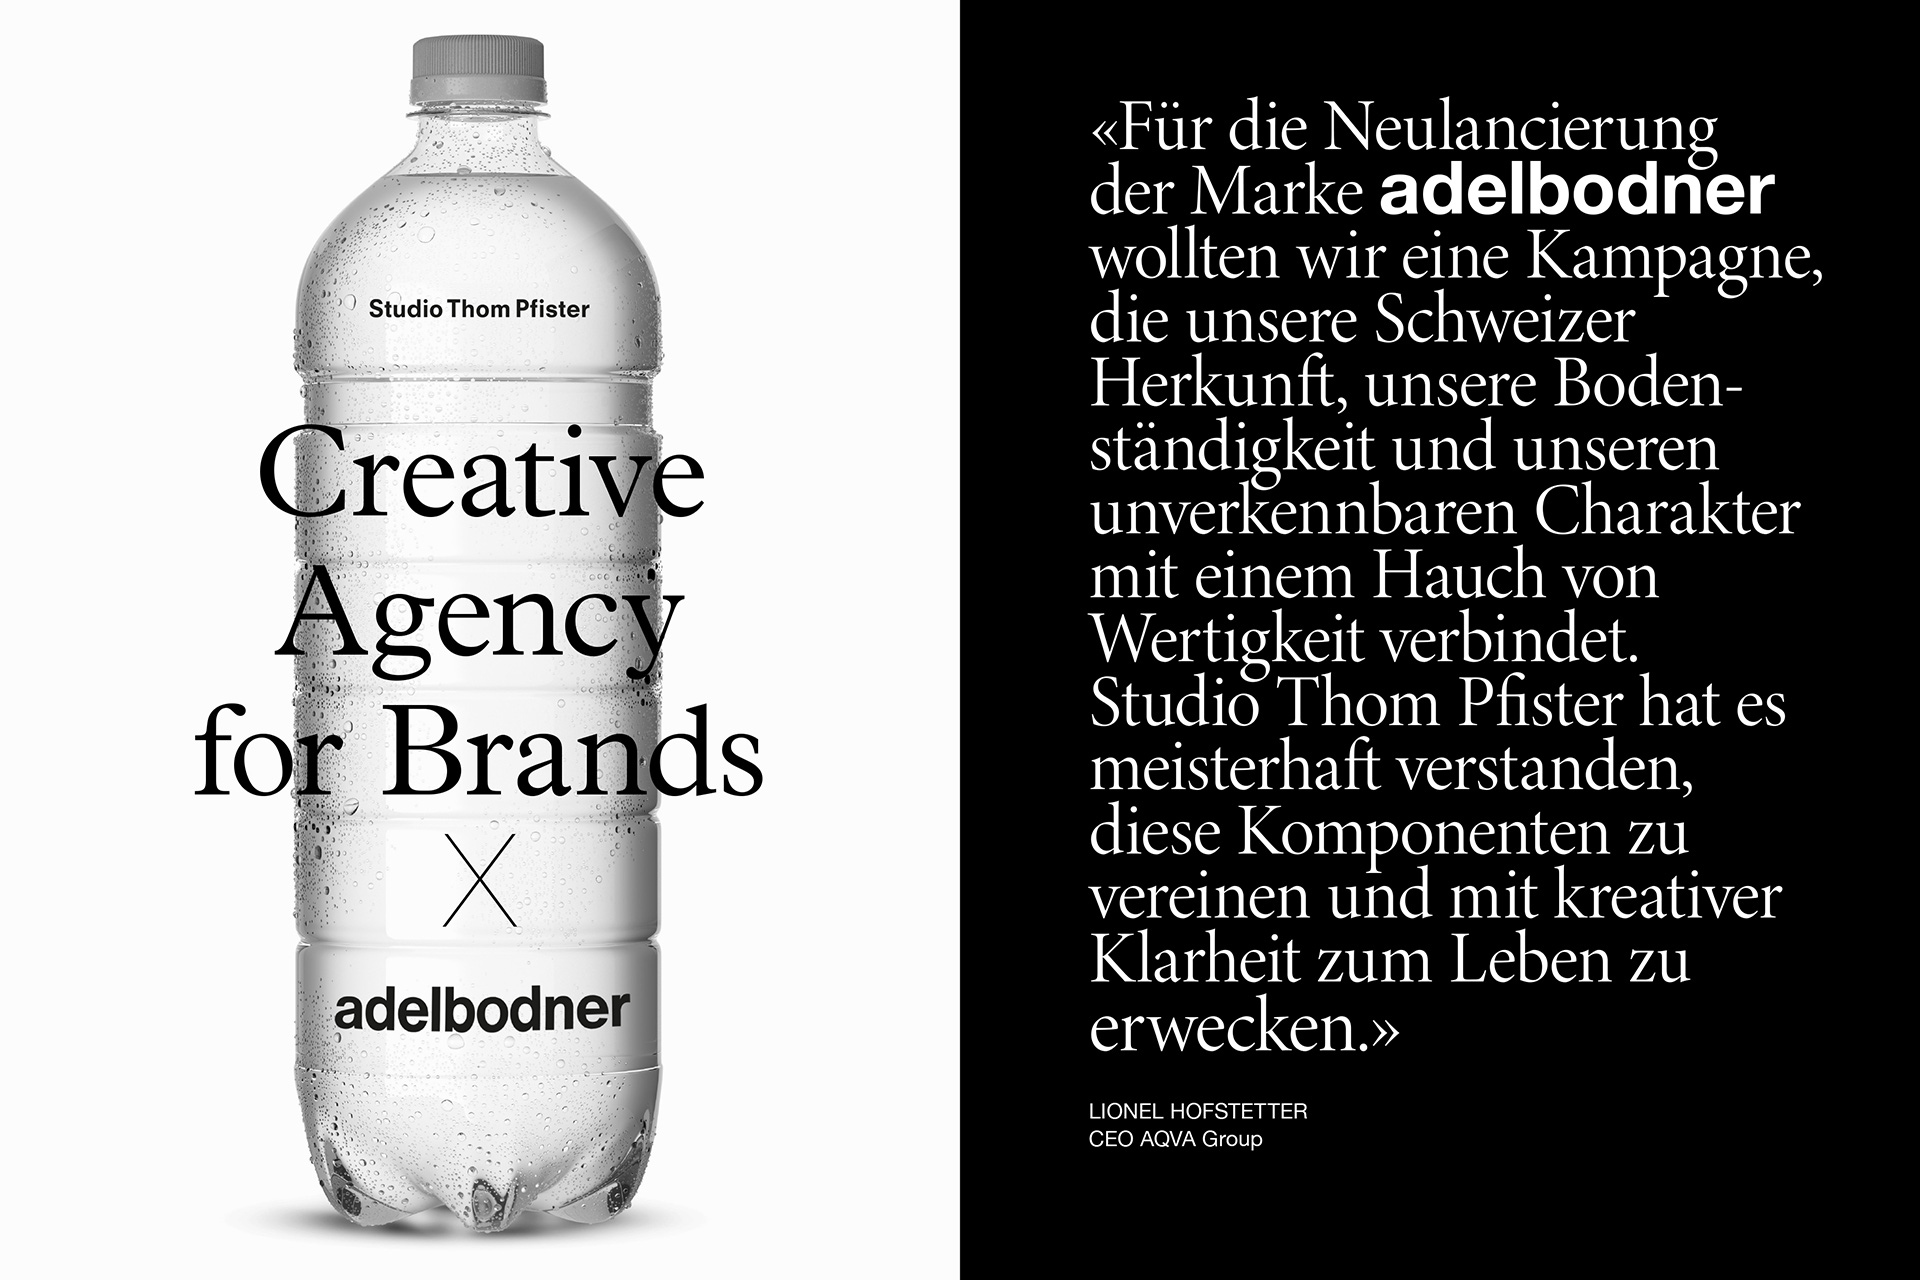 Adelbodner Kampagne Studio Thom Pfister Branding Werbung Kooperation